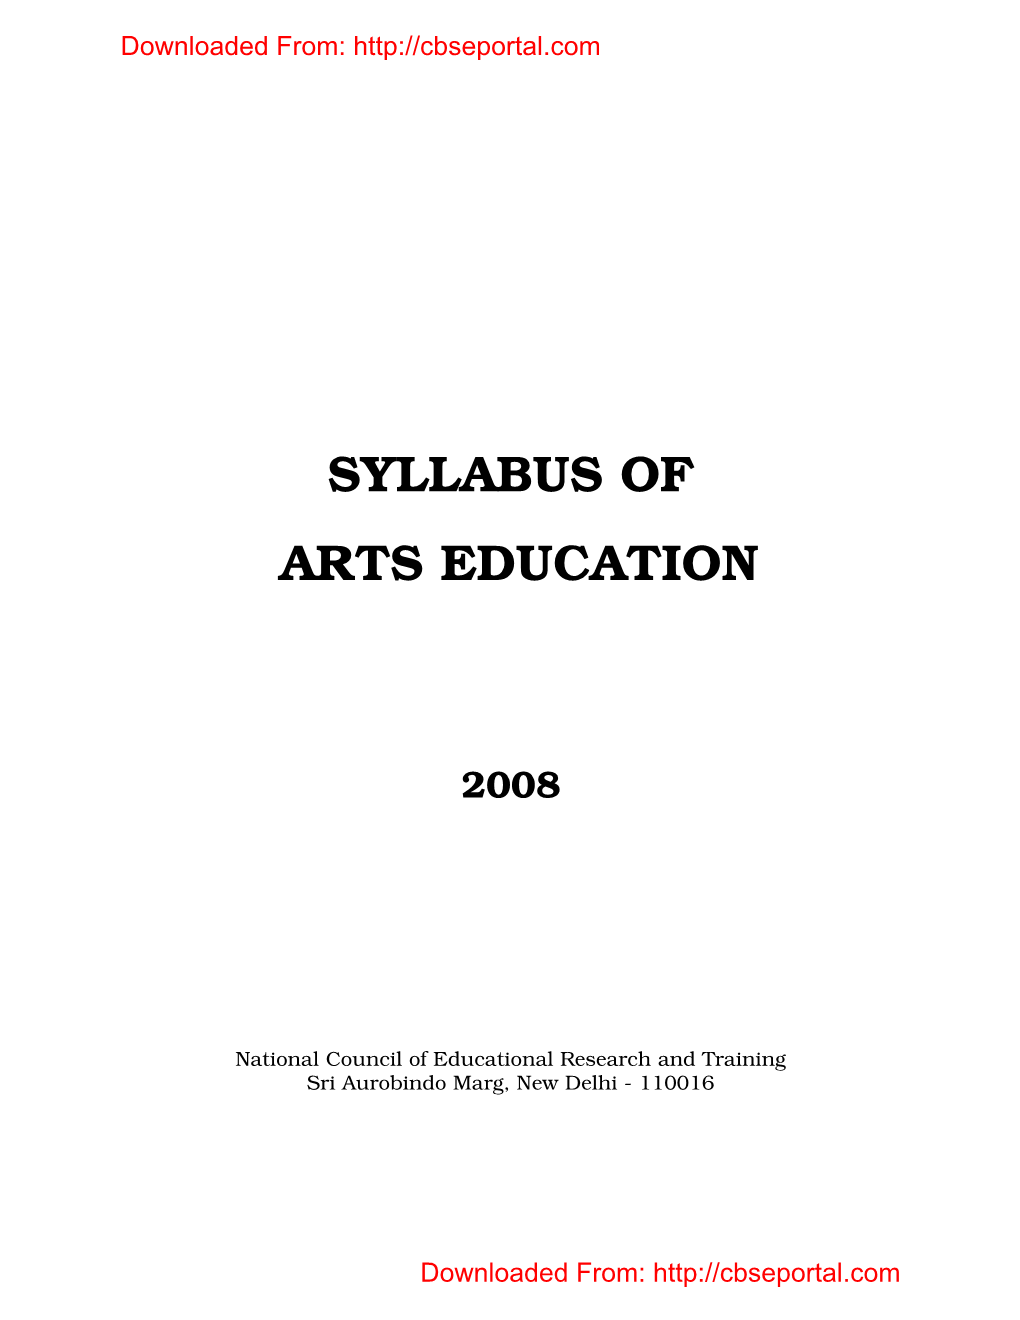 Syllabus of Arts Education